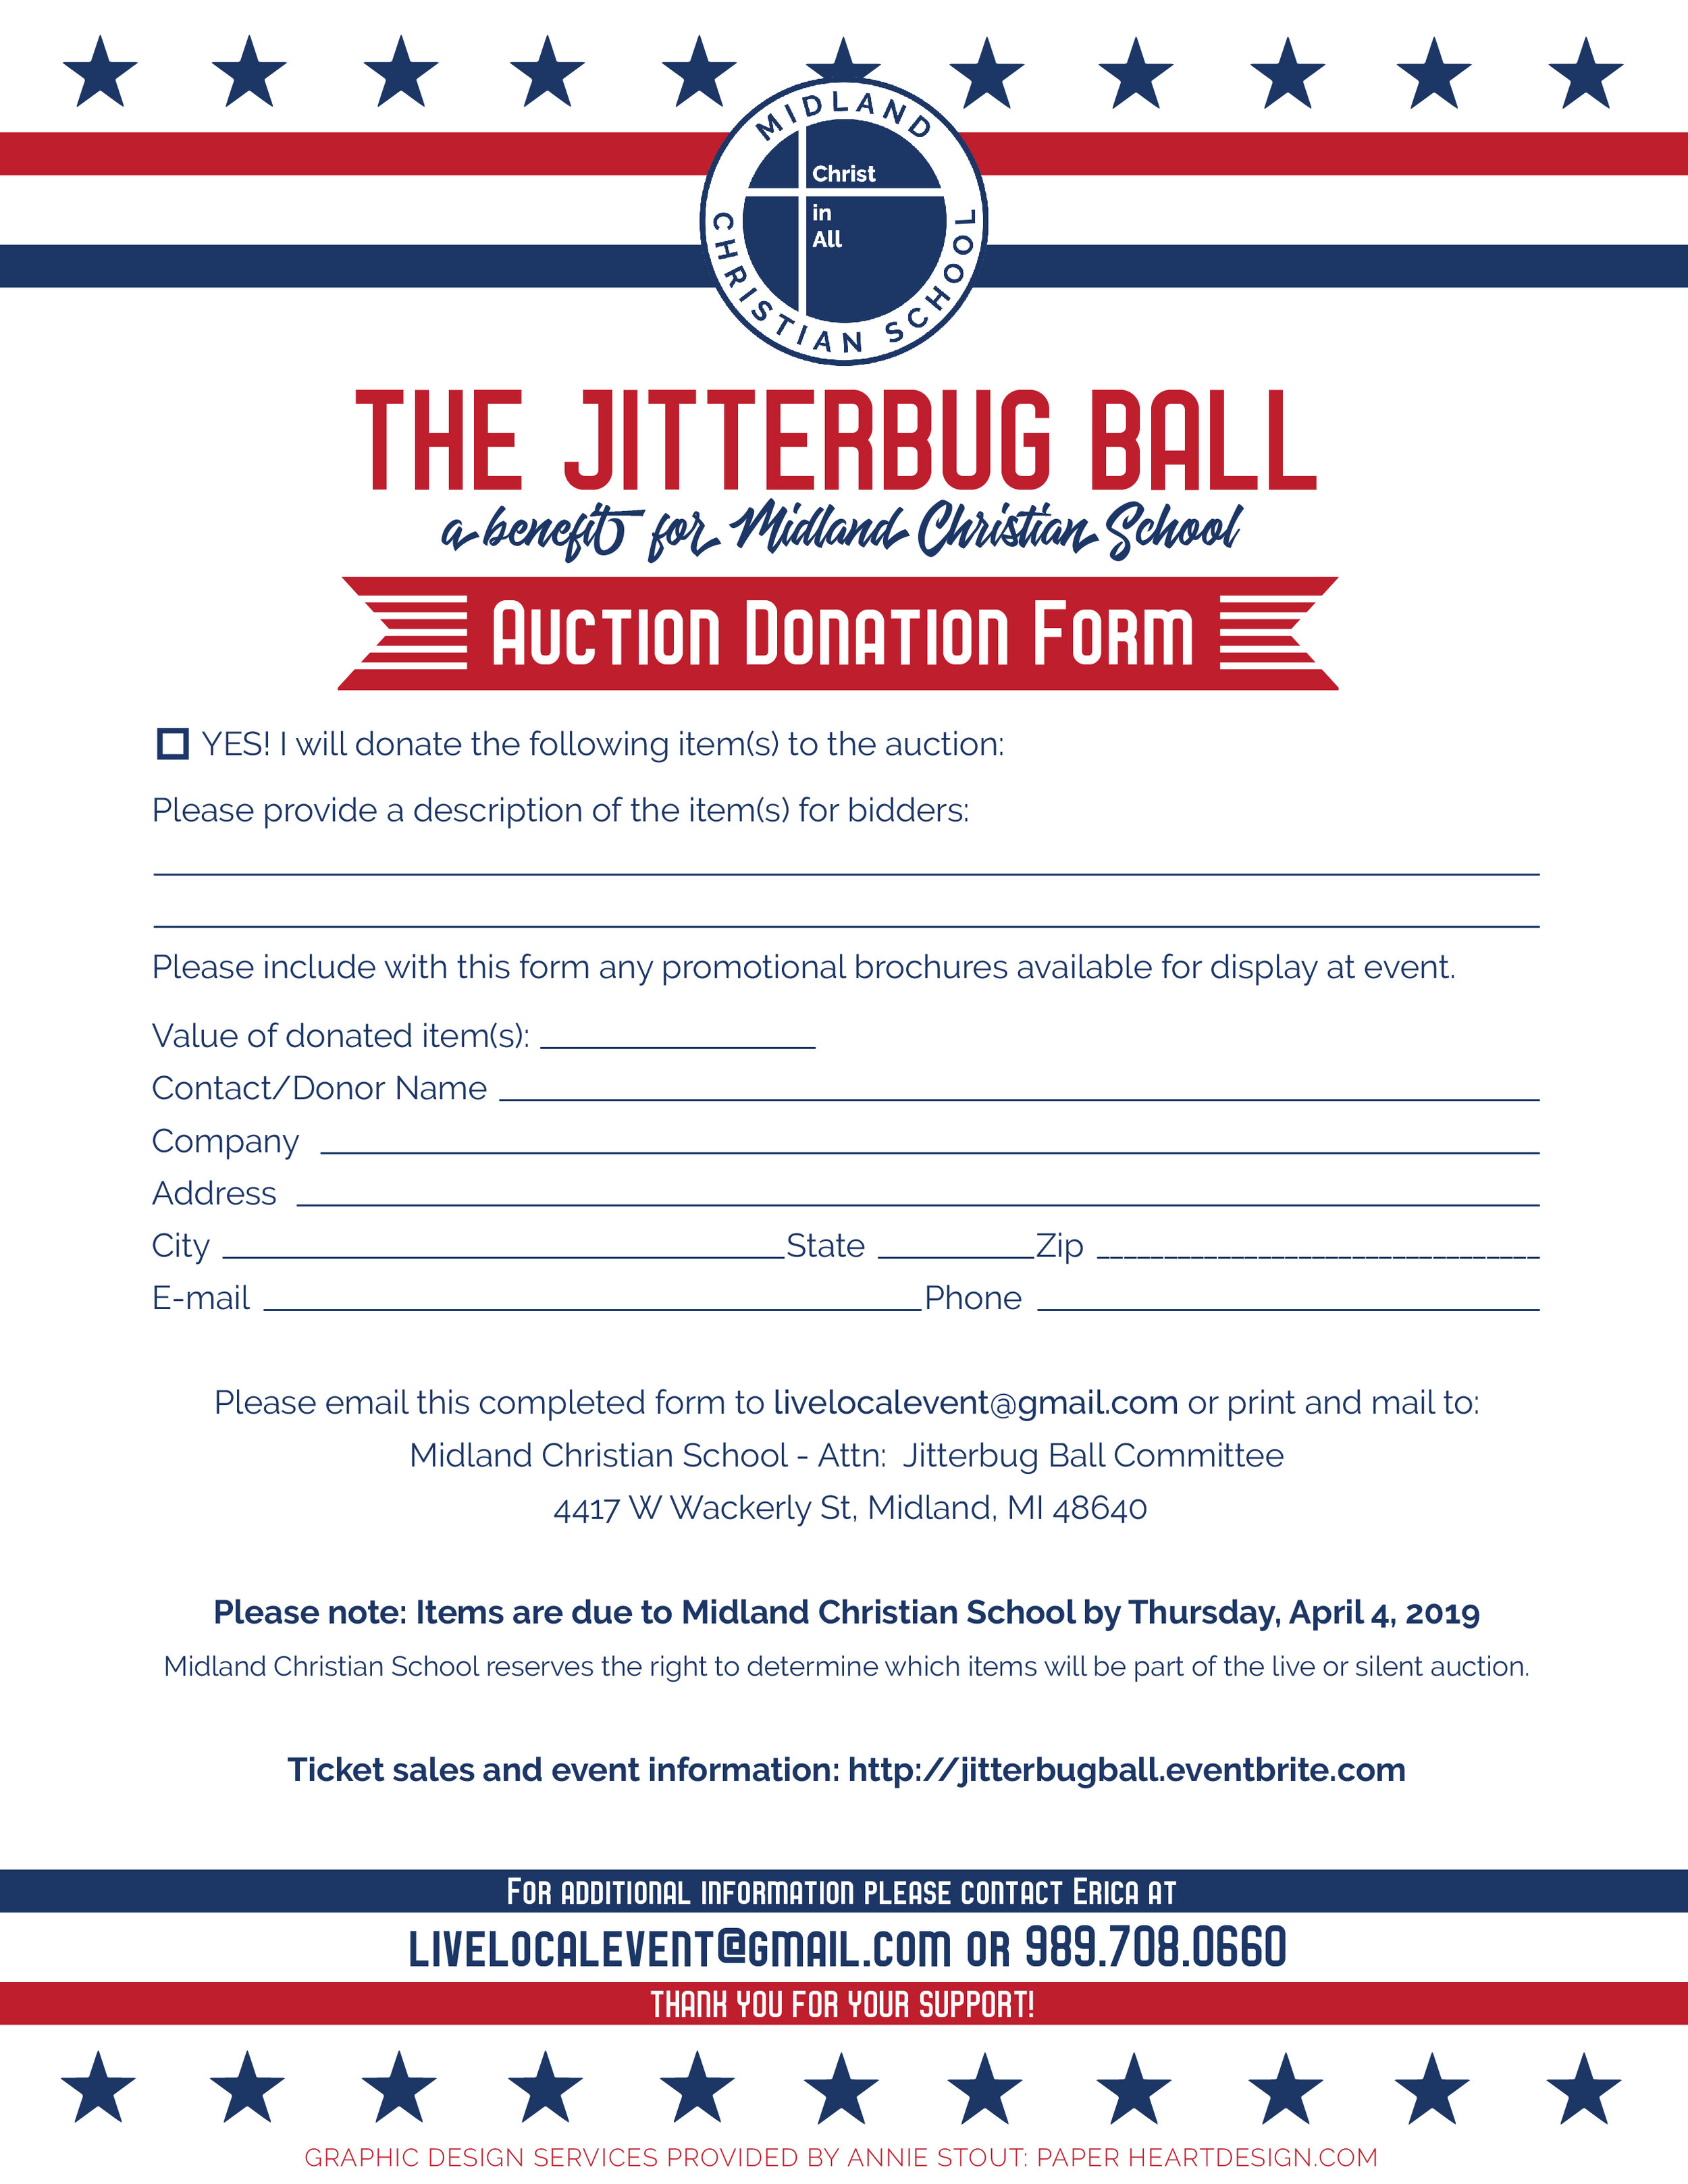 Jitterbug Ball Auction Donation Form-01.jpg